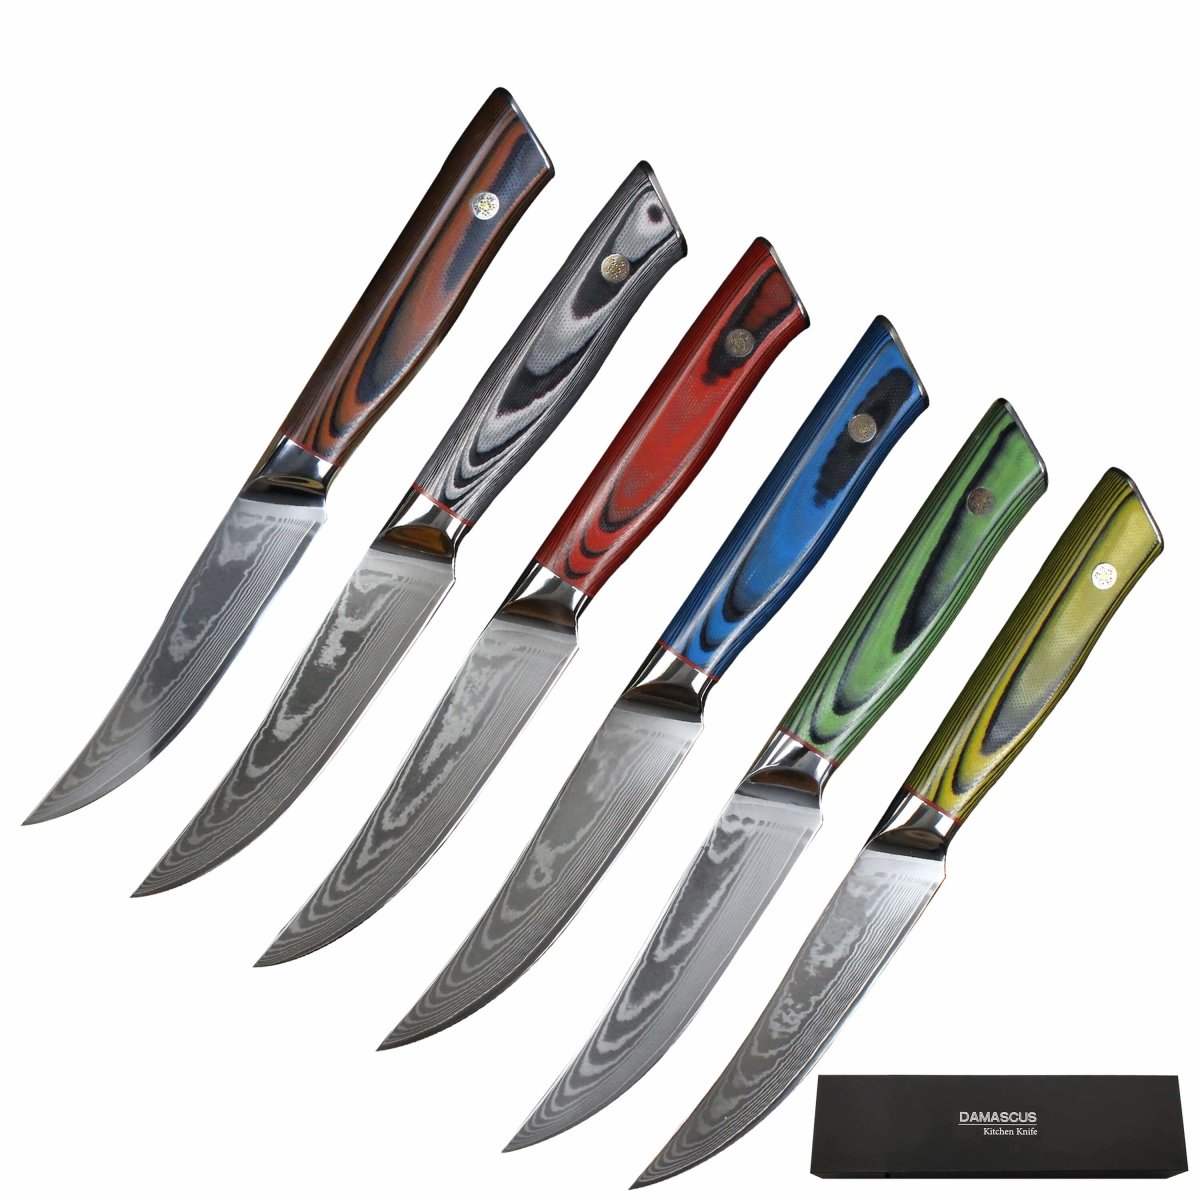  Core Kitchen Set of 6 Colorful Kitchen Steak Knives